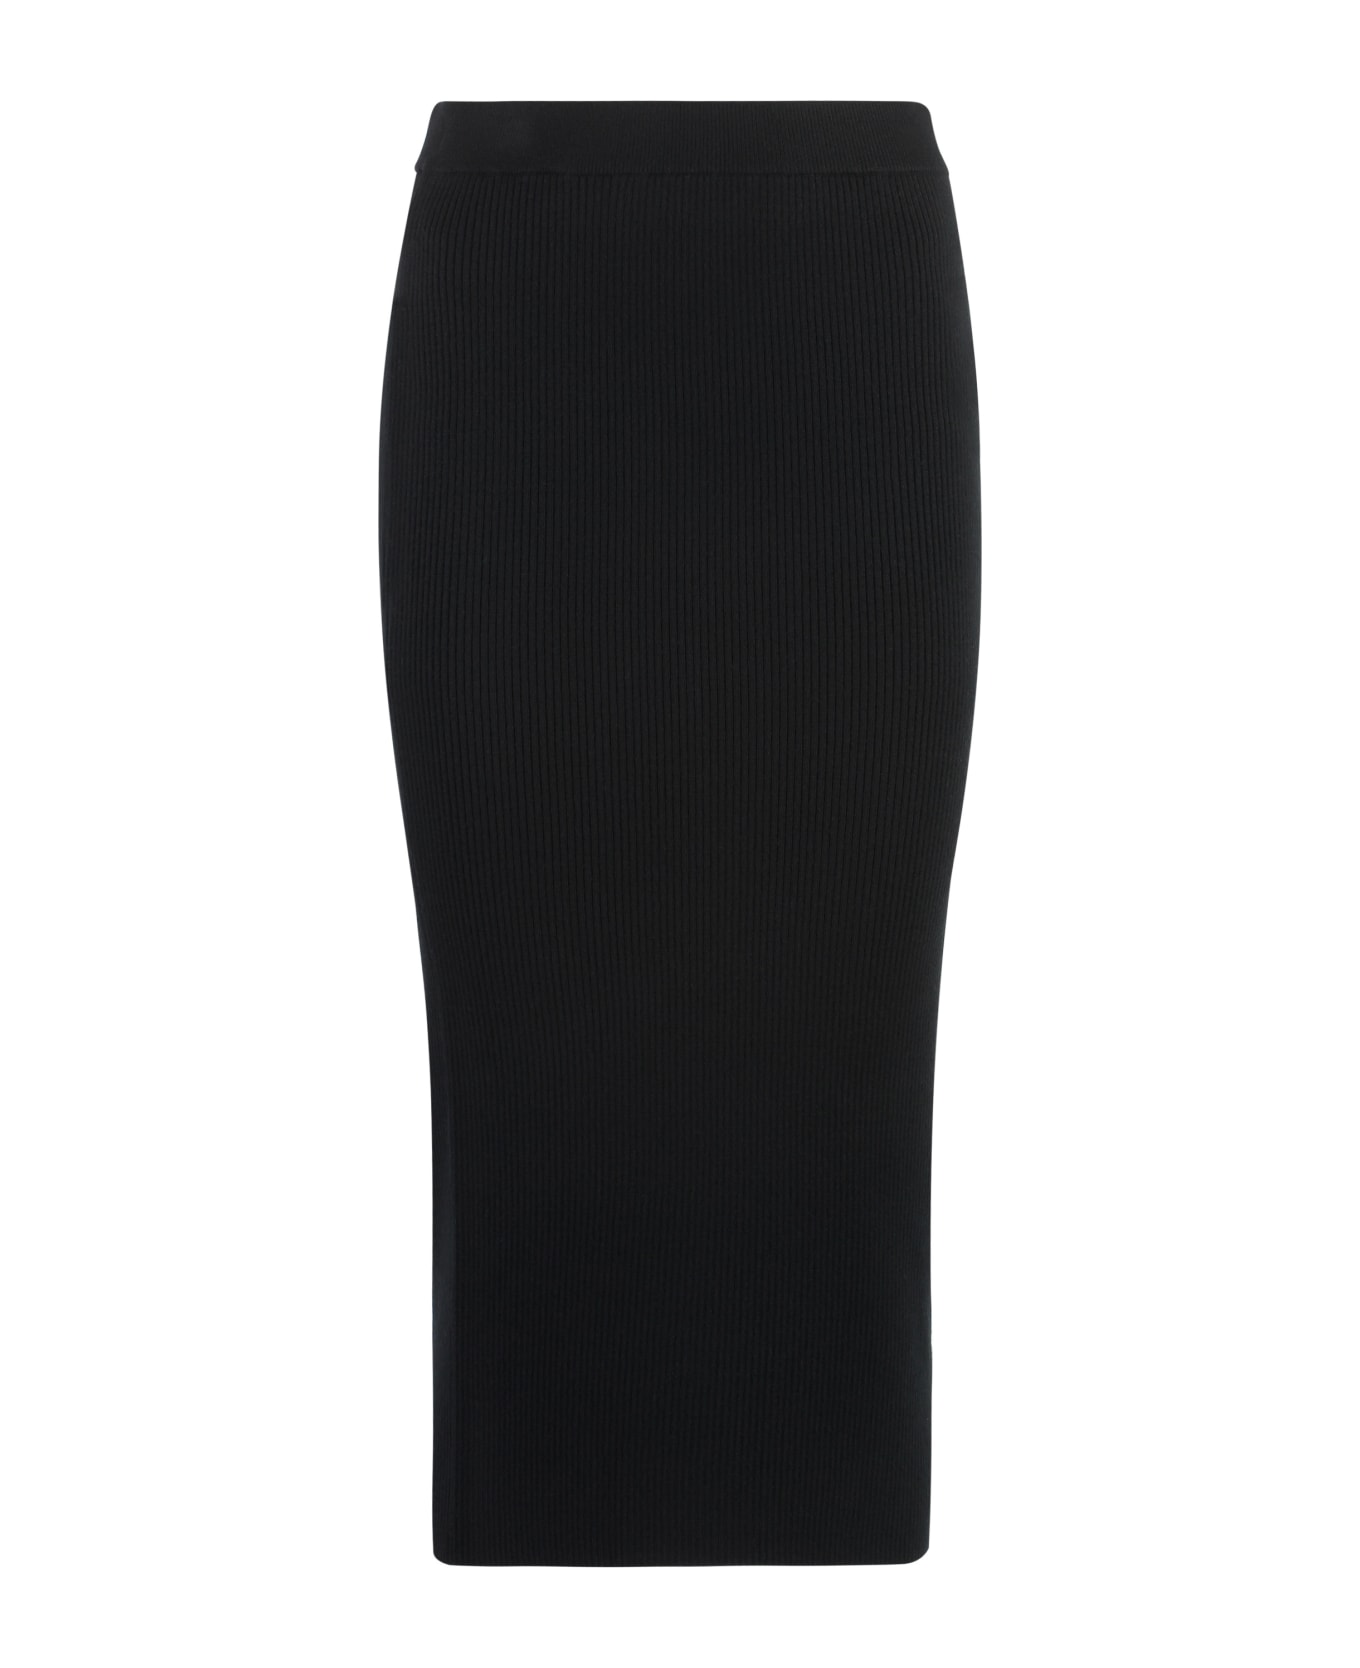 Michael Kors Ribbed Knit Skirt - black スカート